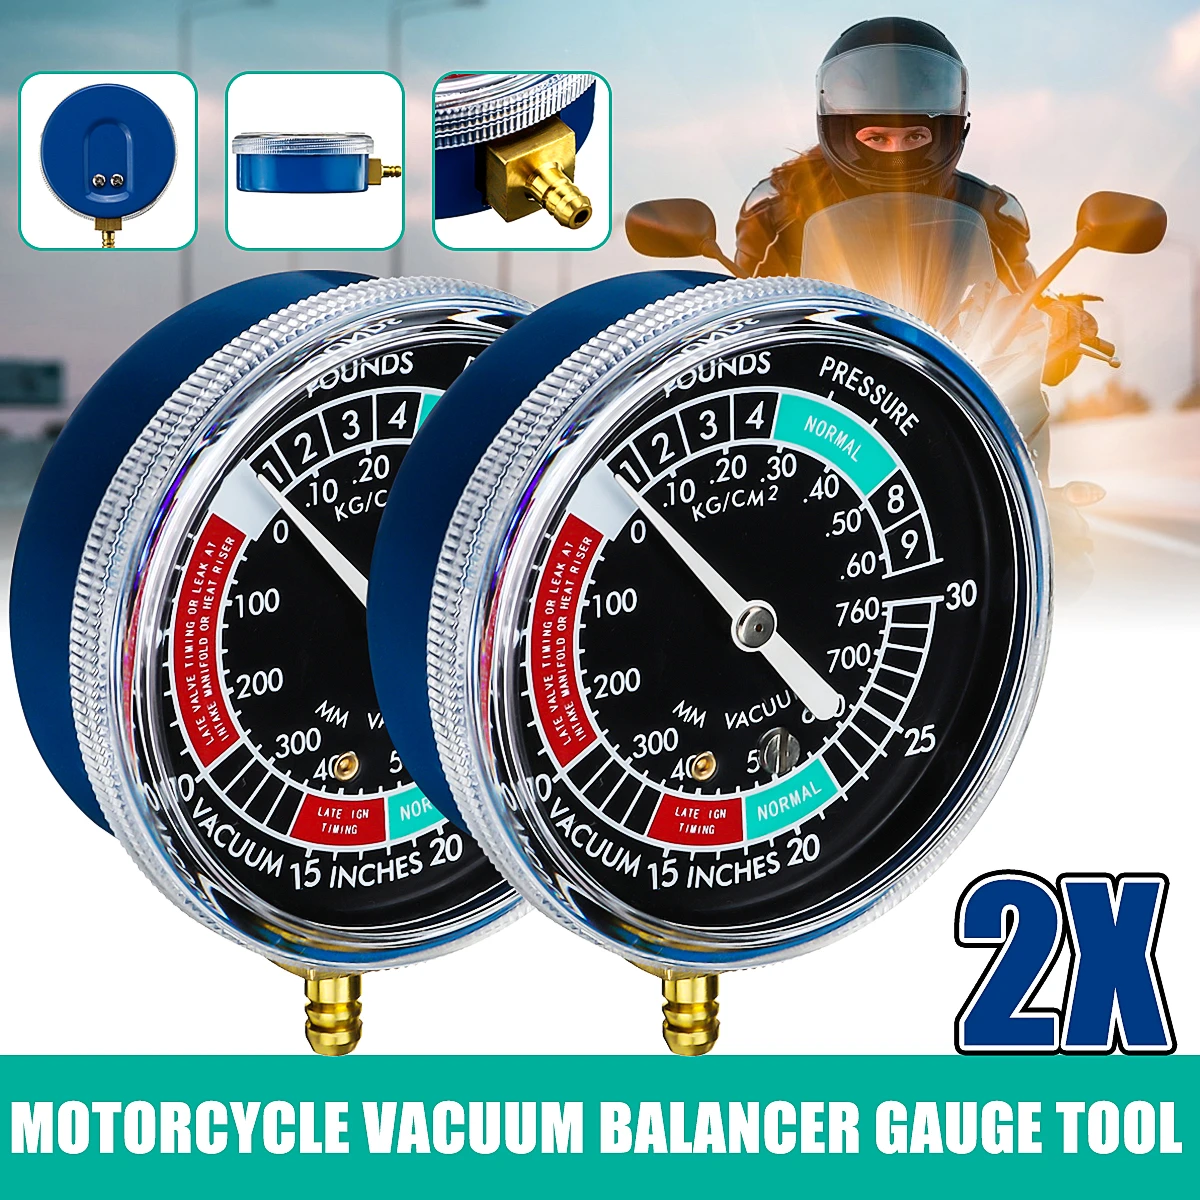 Universal Motorcycle Carburetor Carb Vacuum Gauge Balancer Synchronizer For Yamaha/Honda/Suzuki